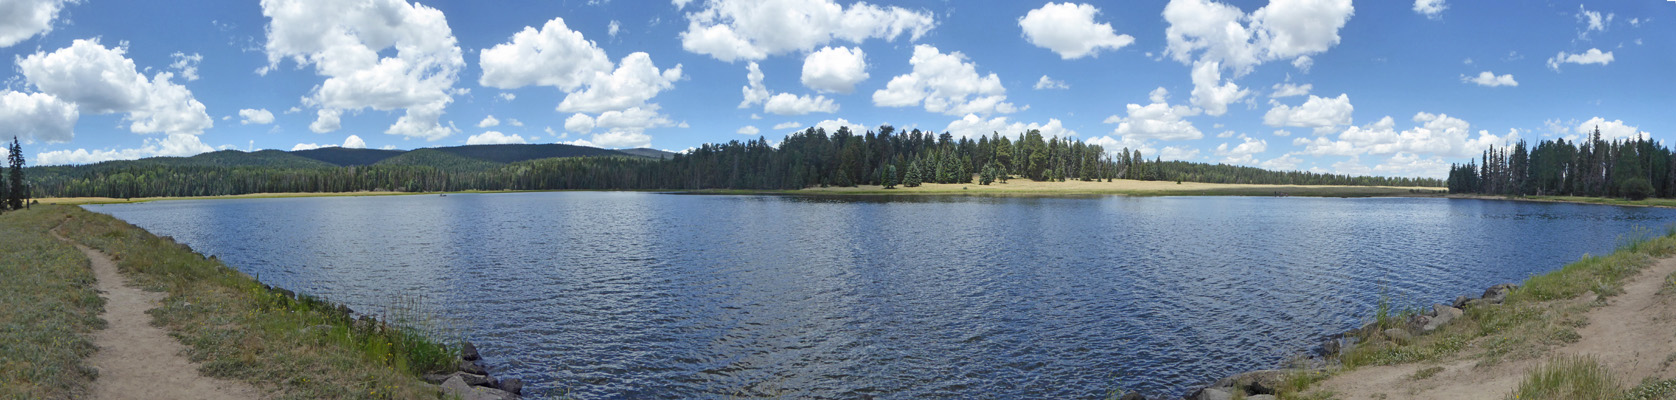 Lee Valley Reservoir